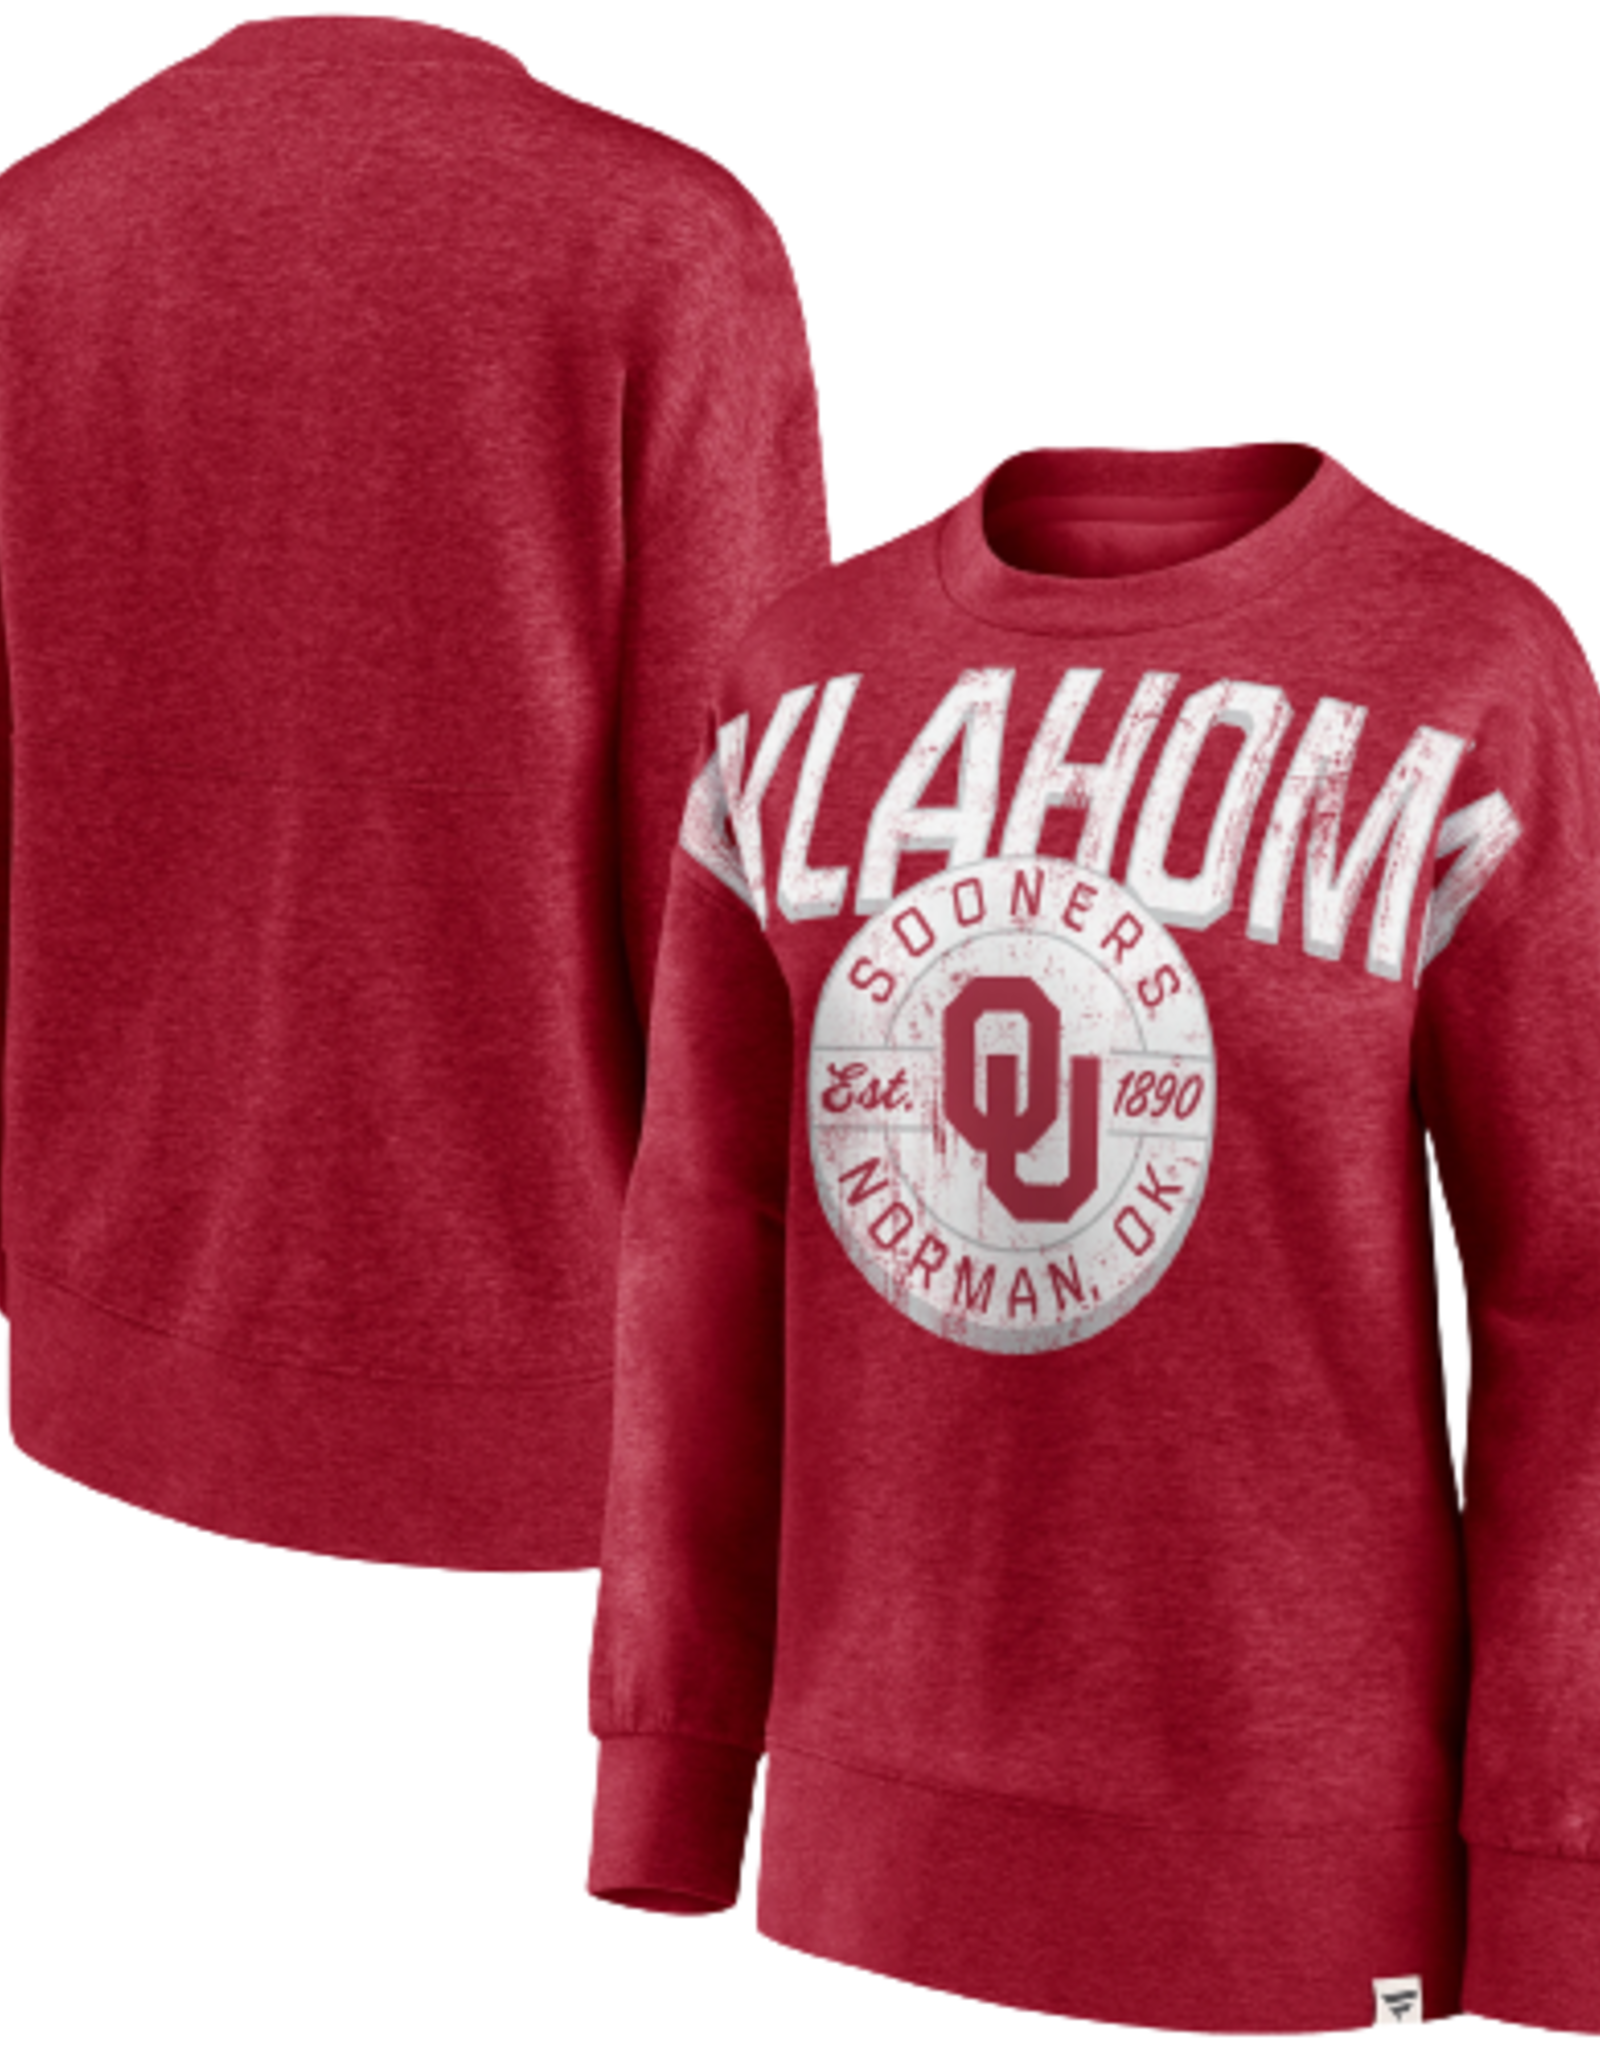 Fanatics Womens Oklahoma Sooners Norman OK Sweatshirt